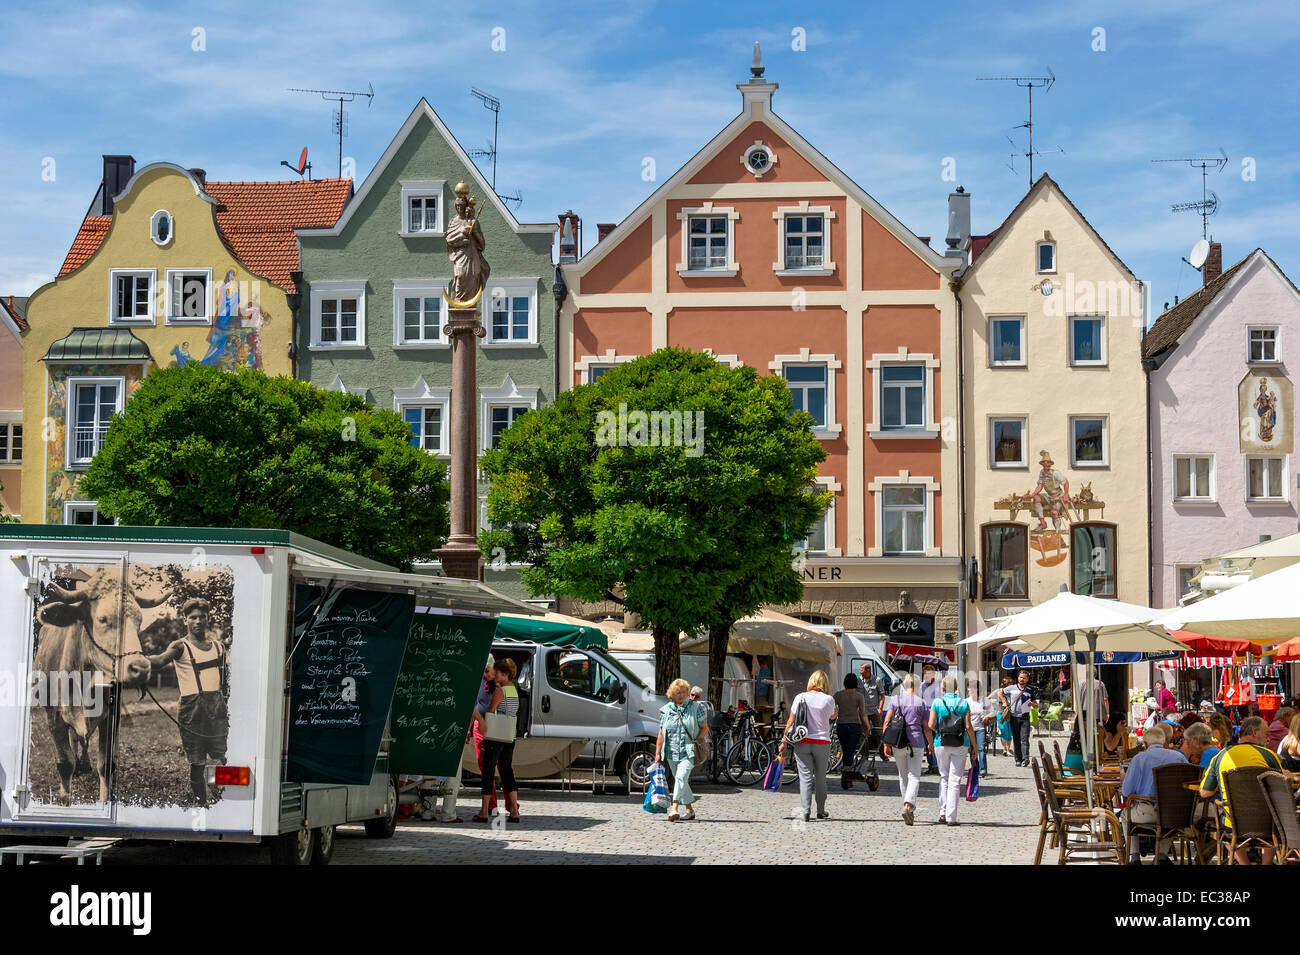 Mercato settimanale mercato, colonna mariana, Marienplatz, Weilheim, Alta Baviera, Baviera, Germania Foto Stock